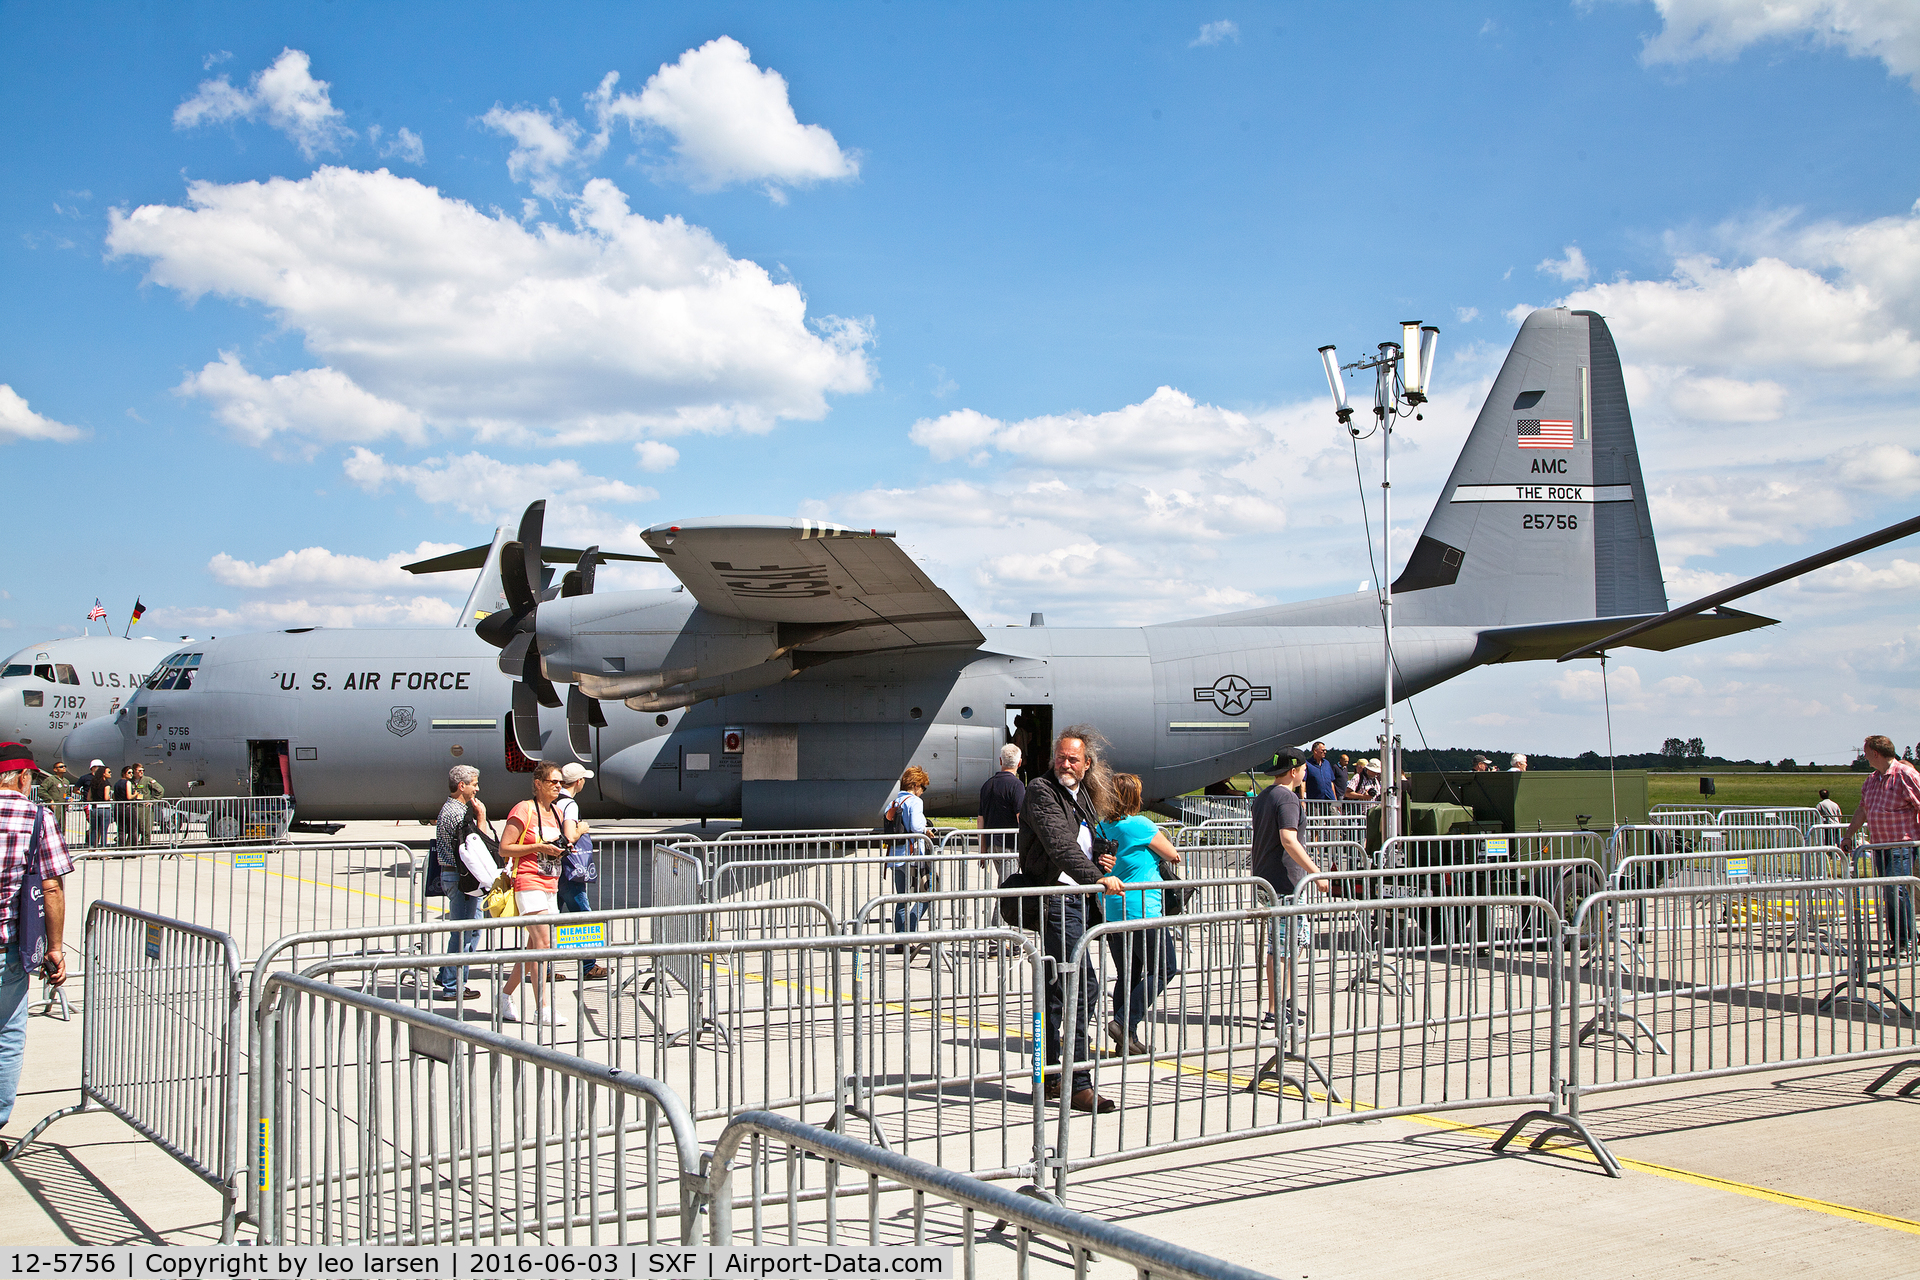 12-5756, 2014 Lockheed Martin C-130J-30 Super Hercules C/N 382-5756, Berlin Air Show 3.6.16